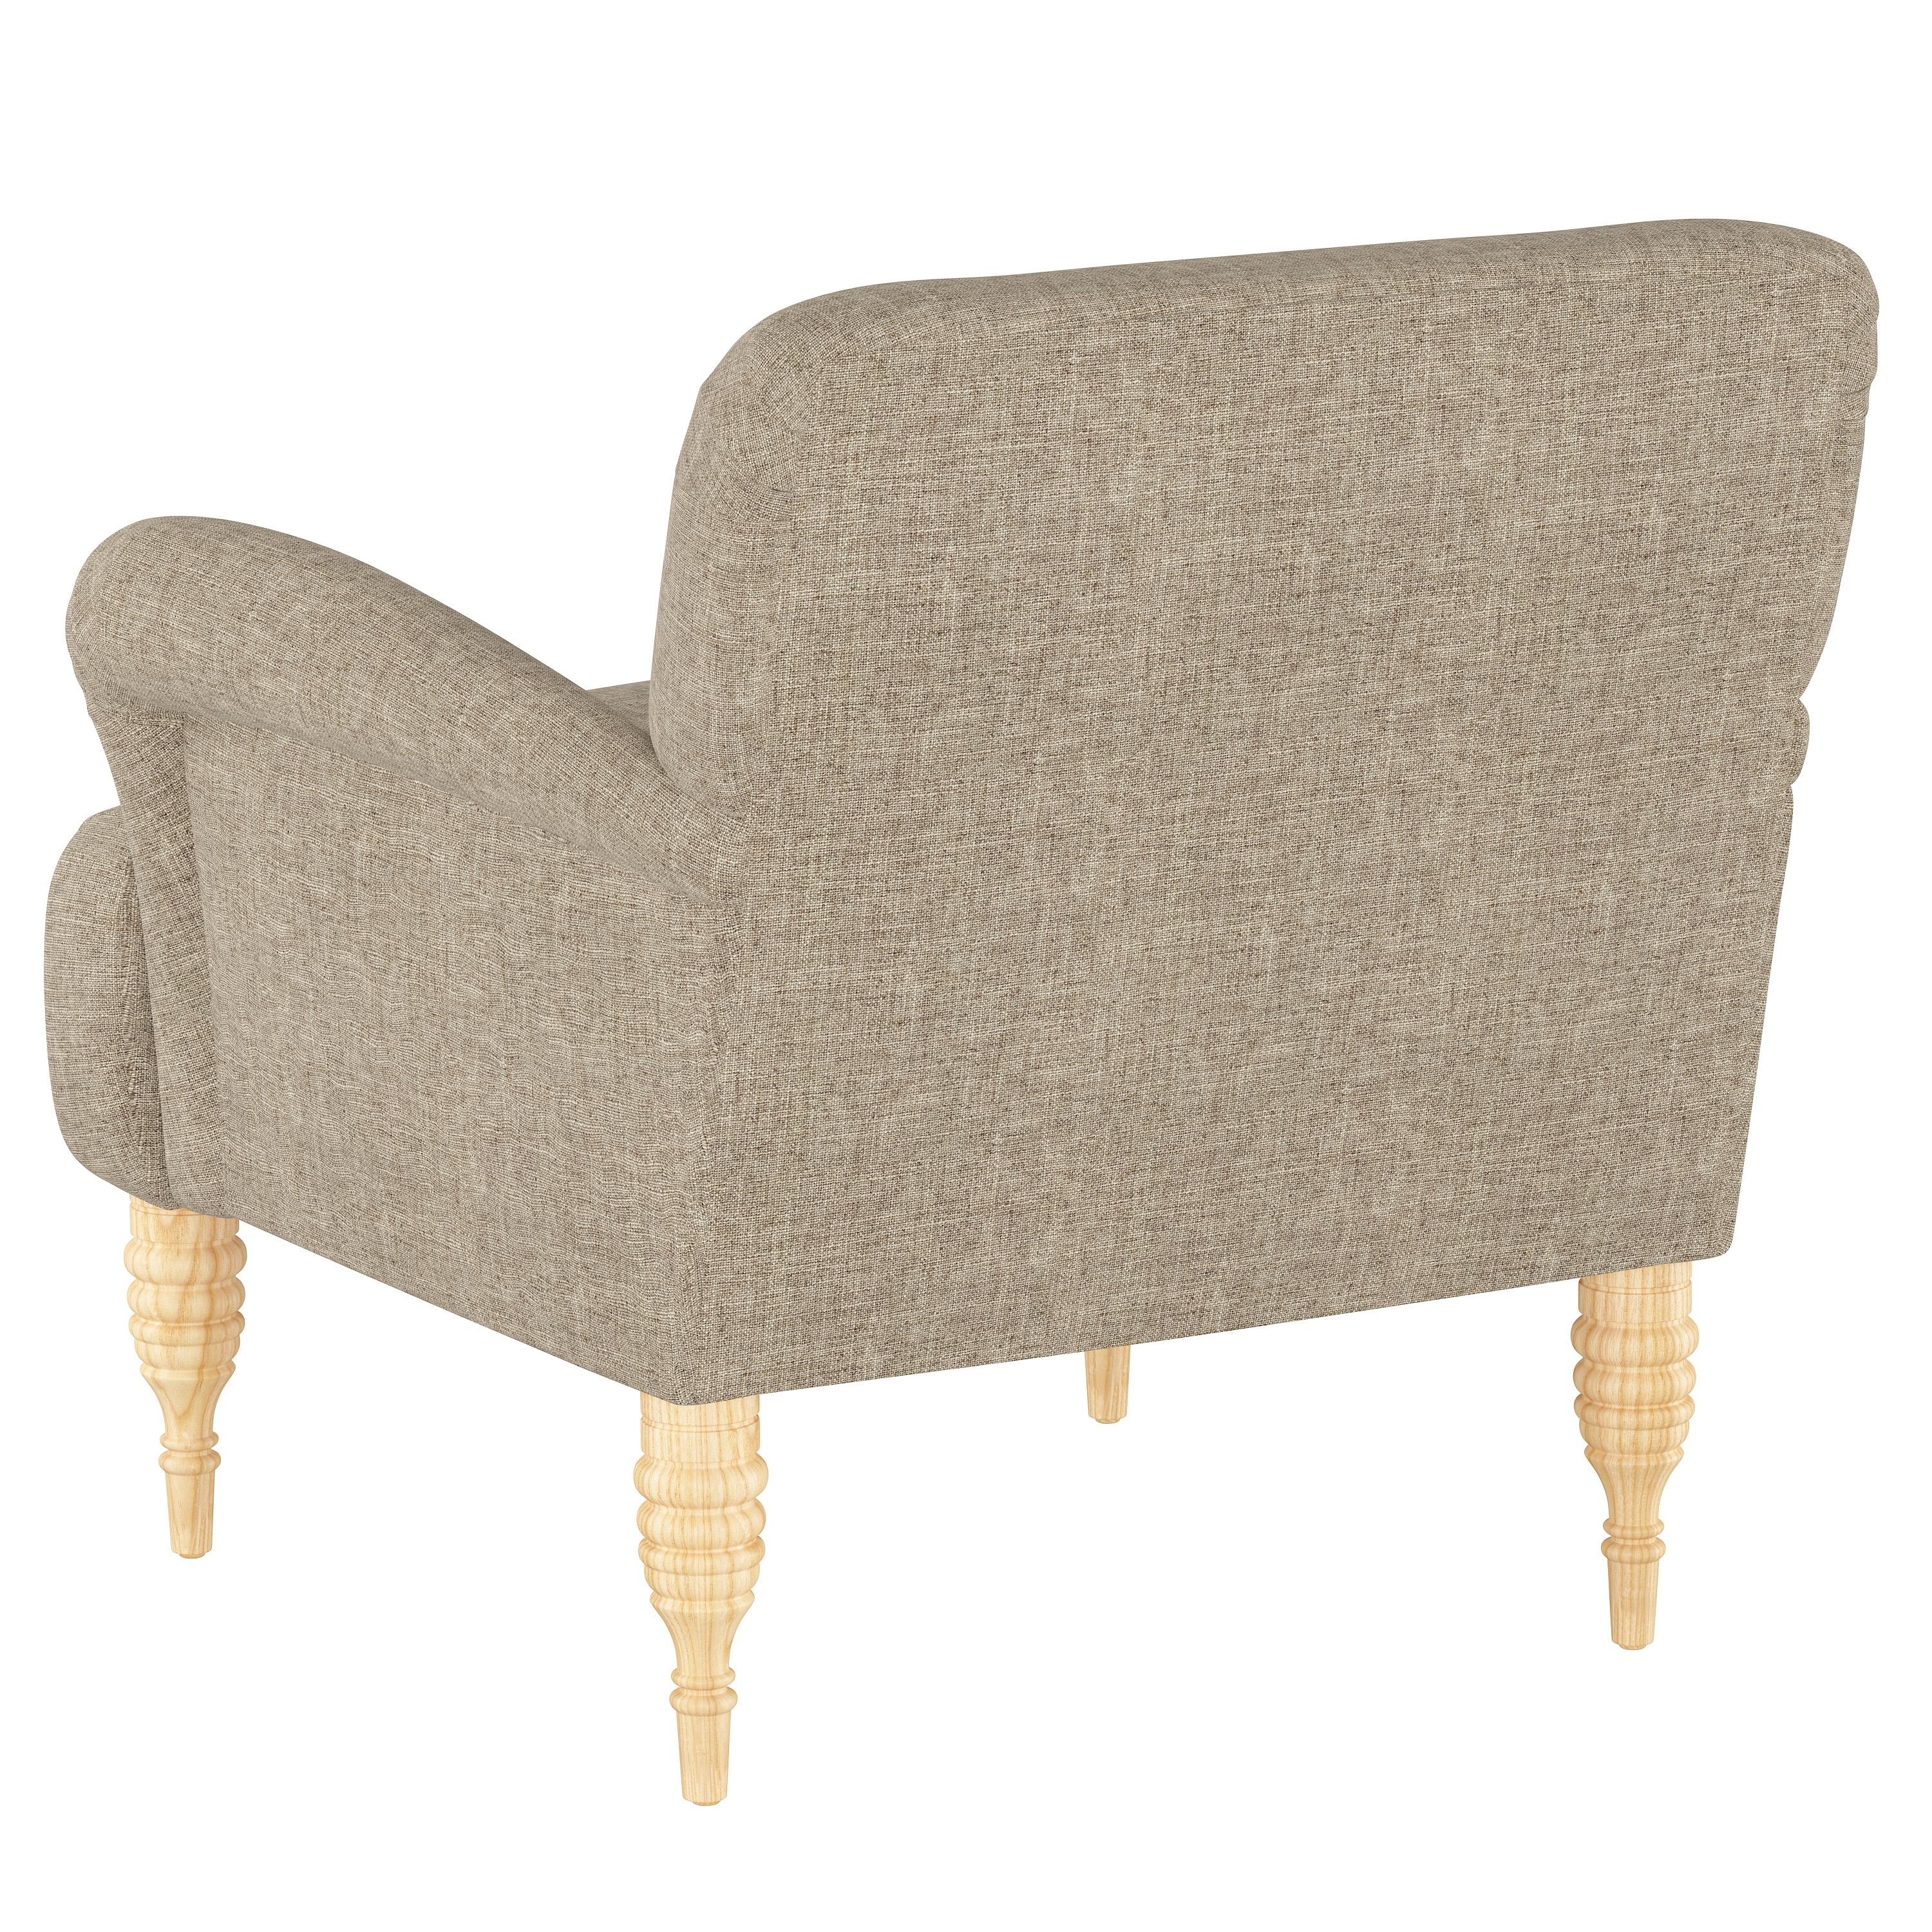 Merrill Chair, Linen - Image 3